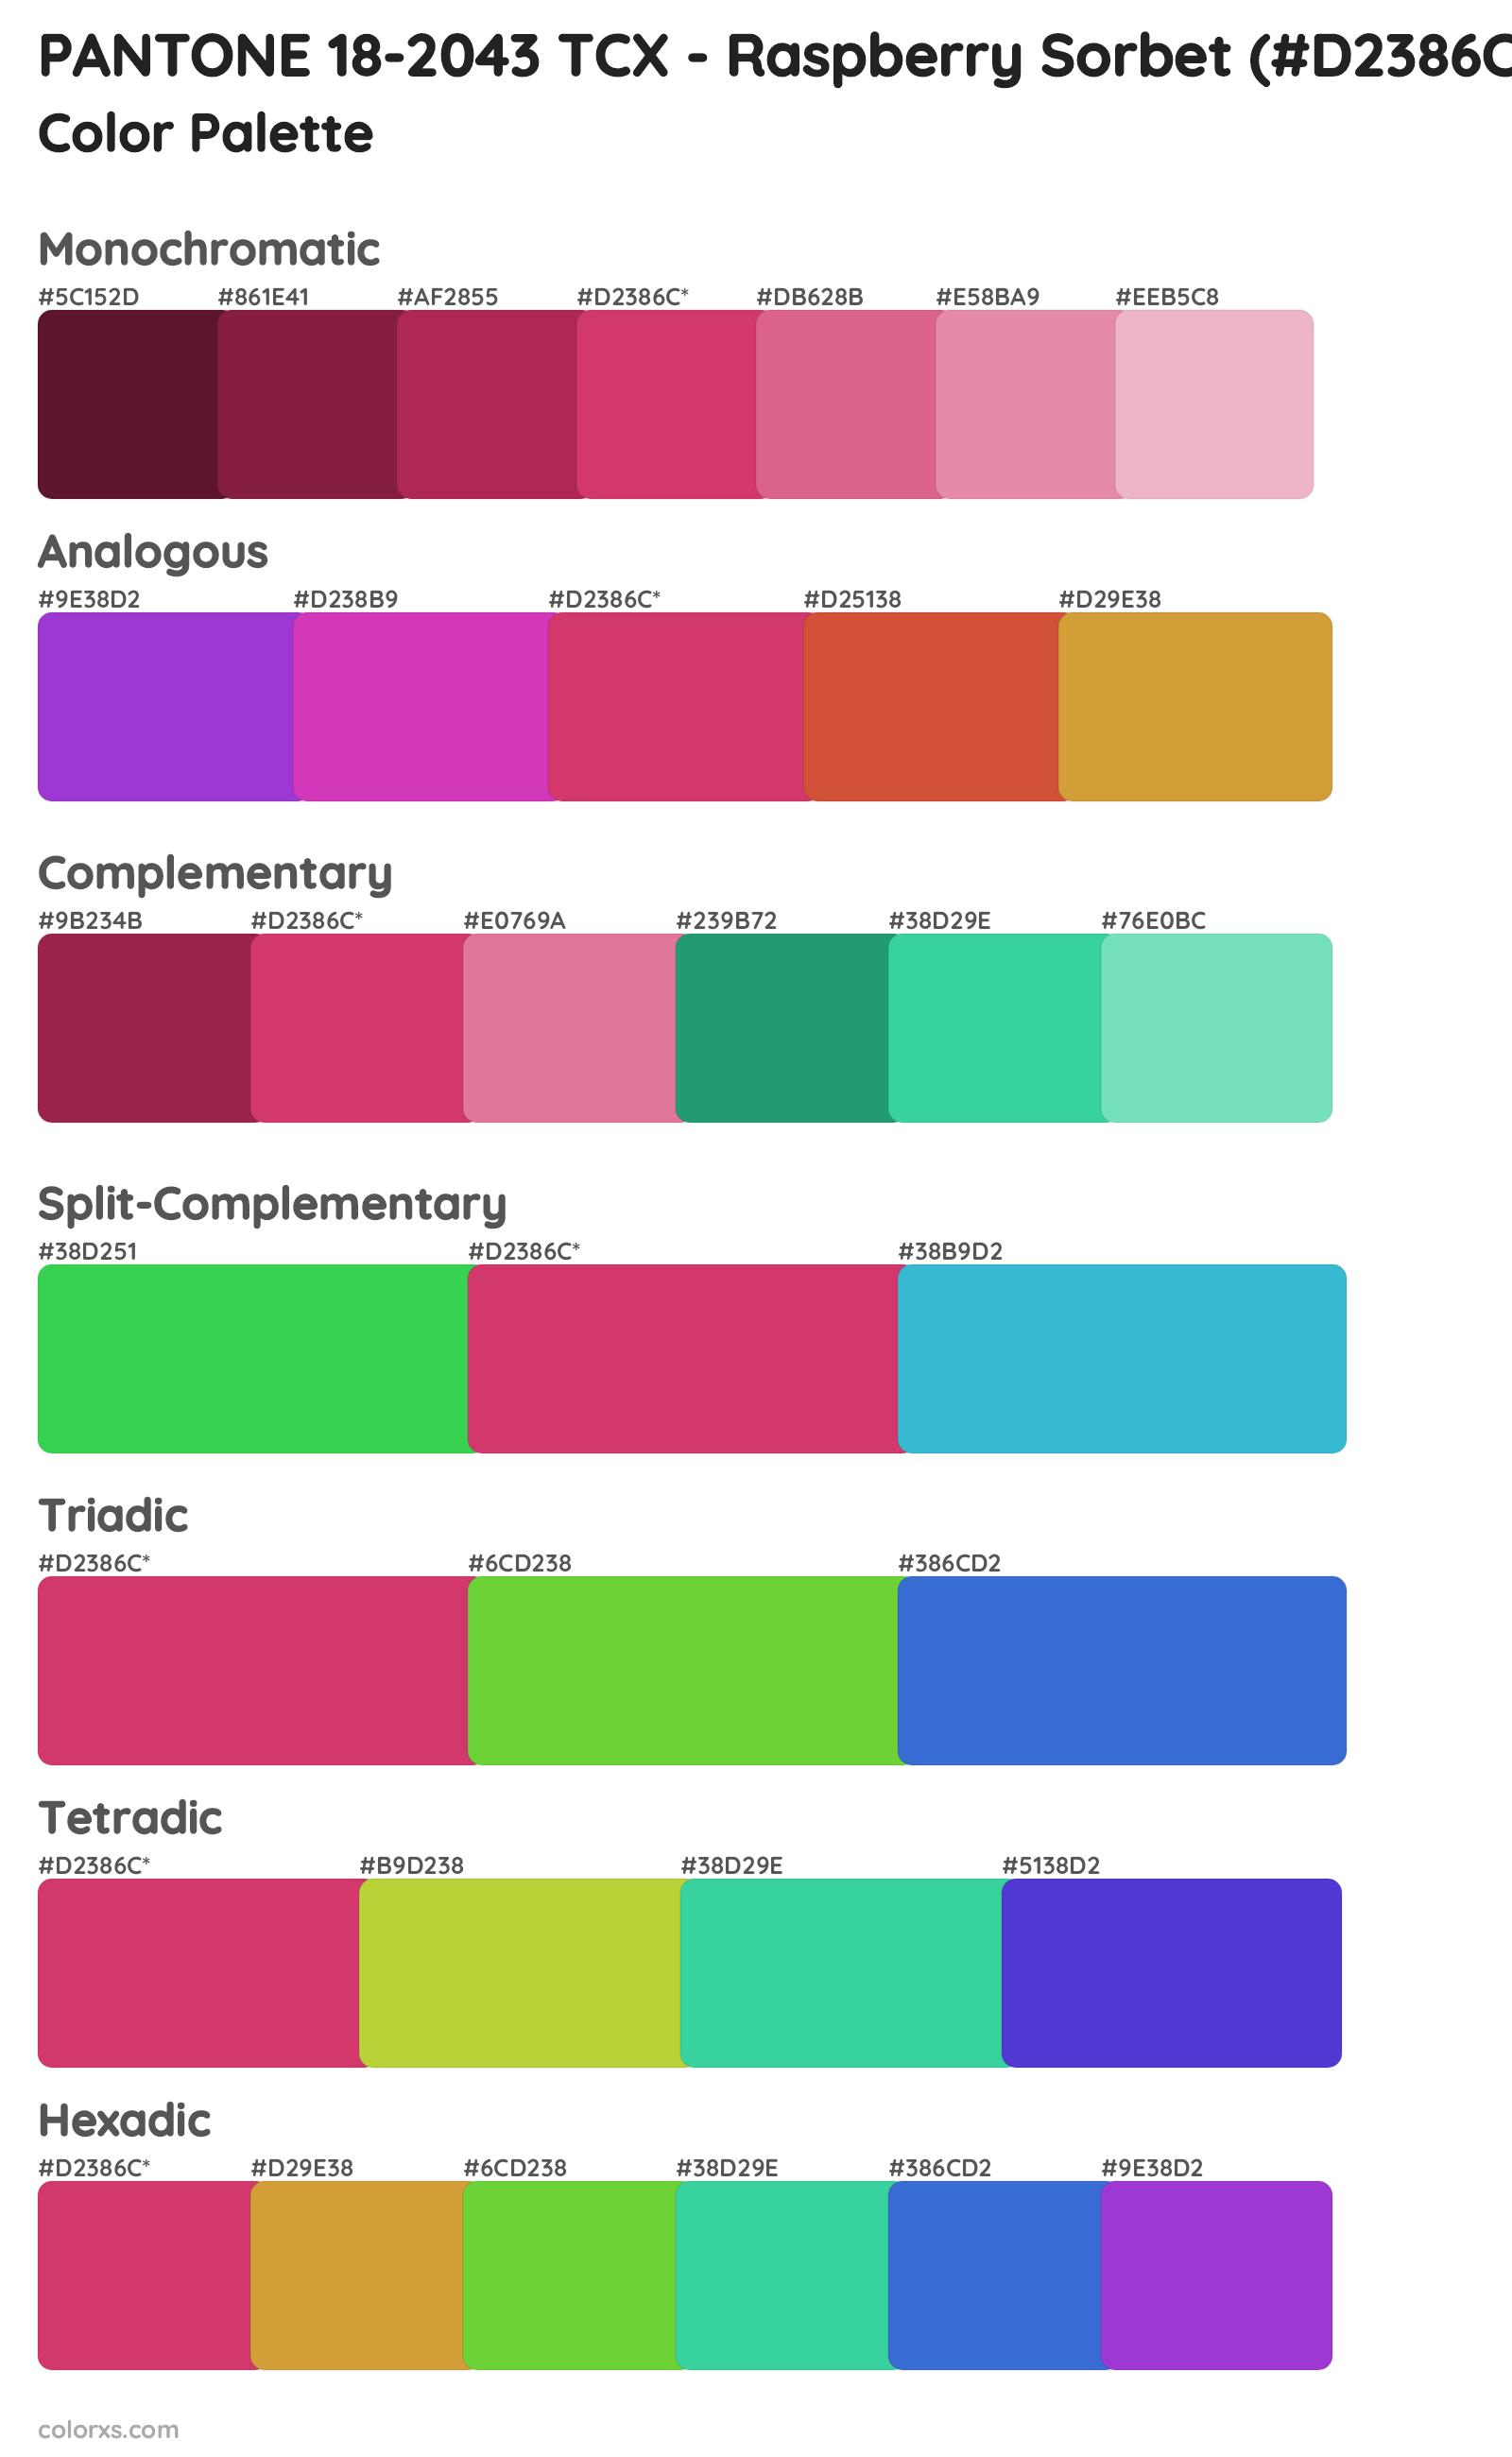 PANTONE 18-2043 TCX - Raspberry Sorbet Color Scheme Palettes